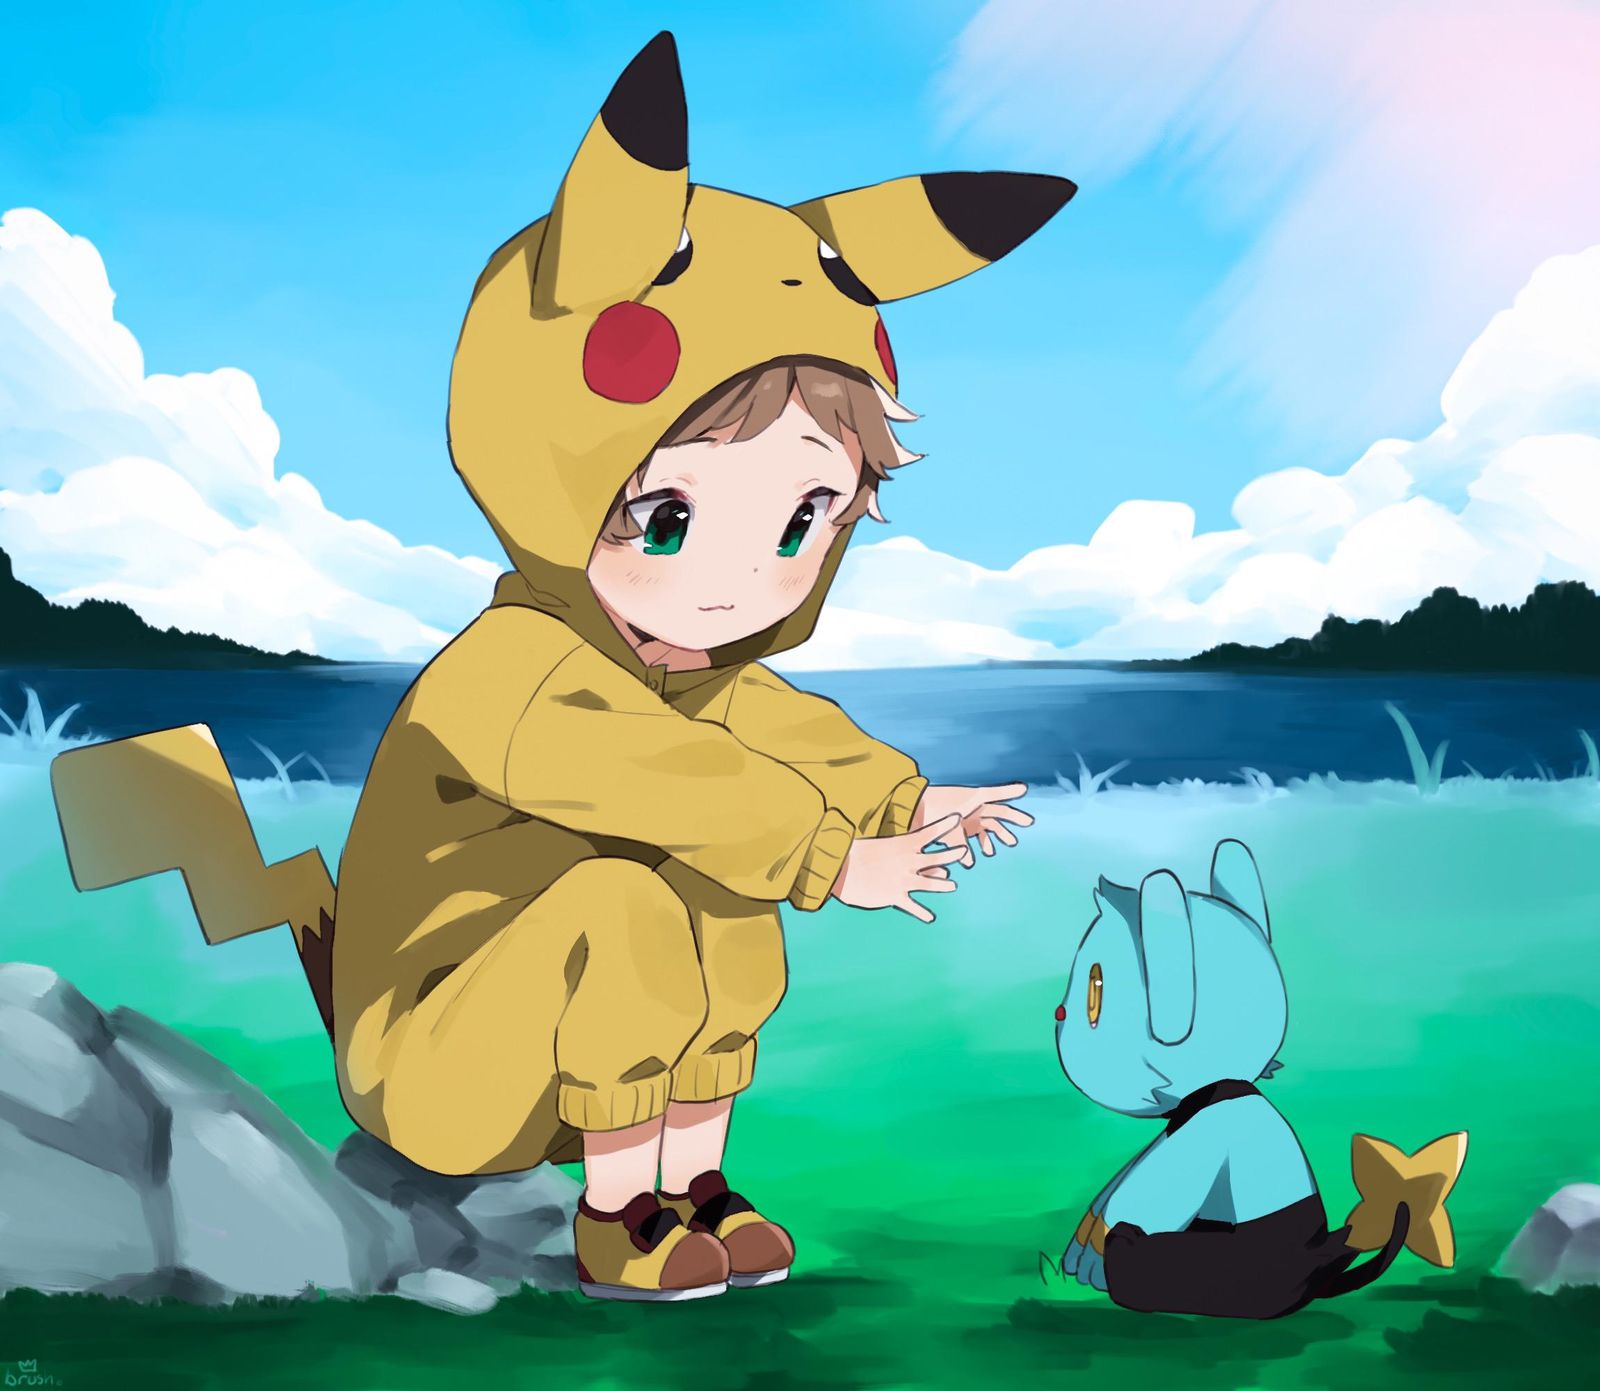 A PokéKid and his Pokémon插画图片壁纸